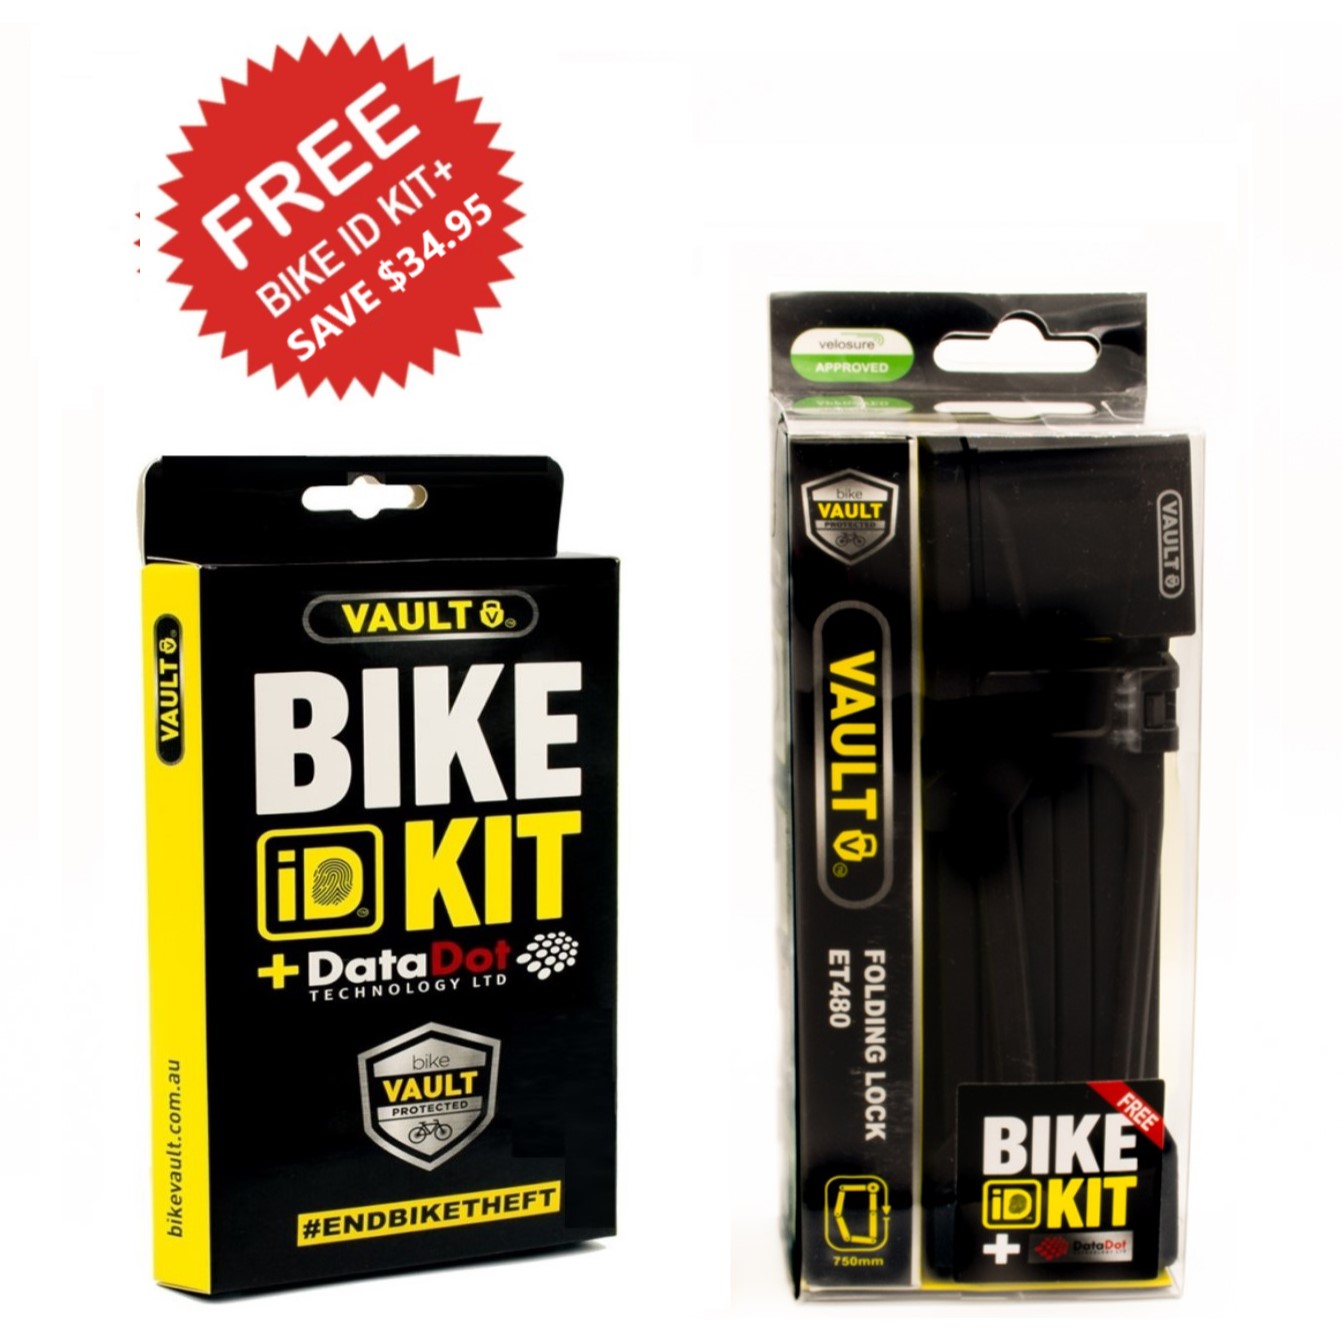 Vault Folding Lock (Black)+ Bonus Bike ID Kit + - DataDot Technology Ltd